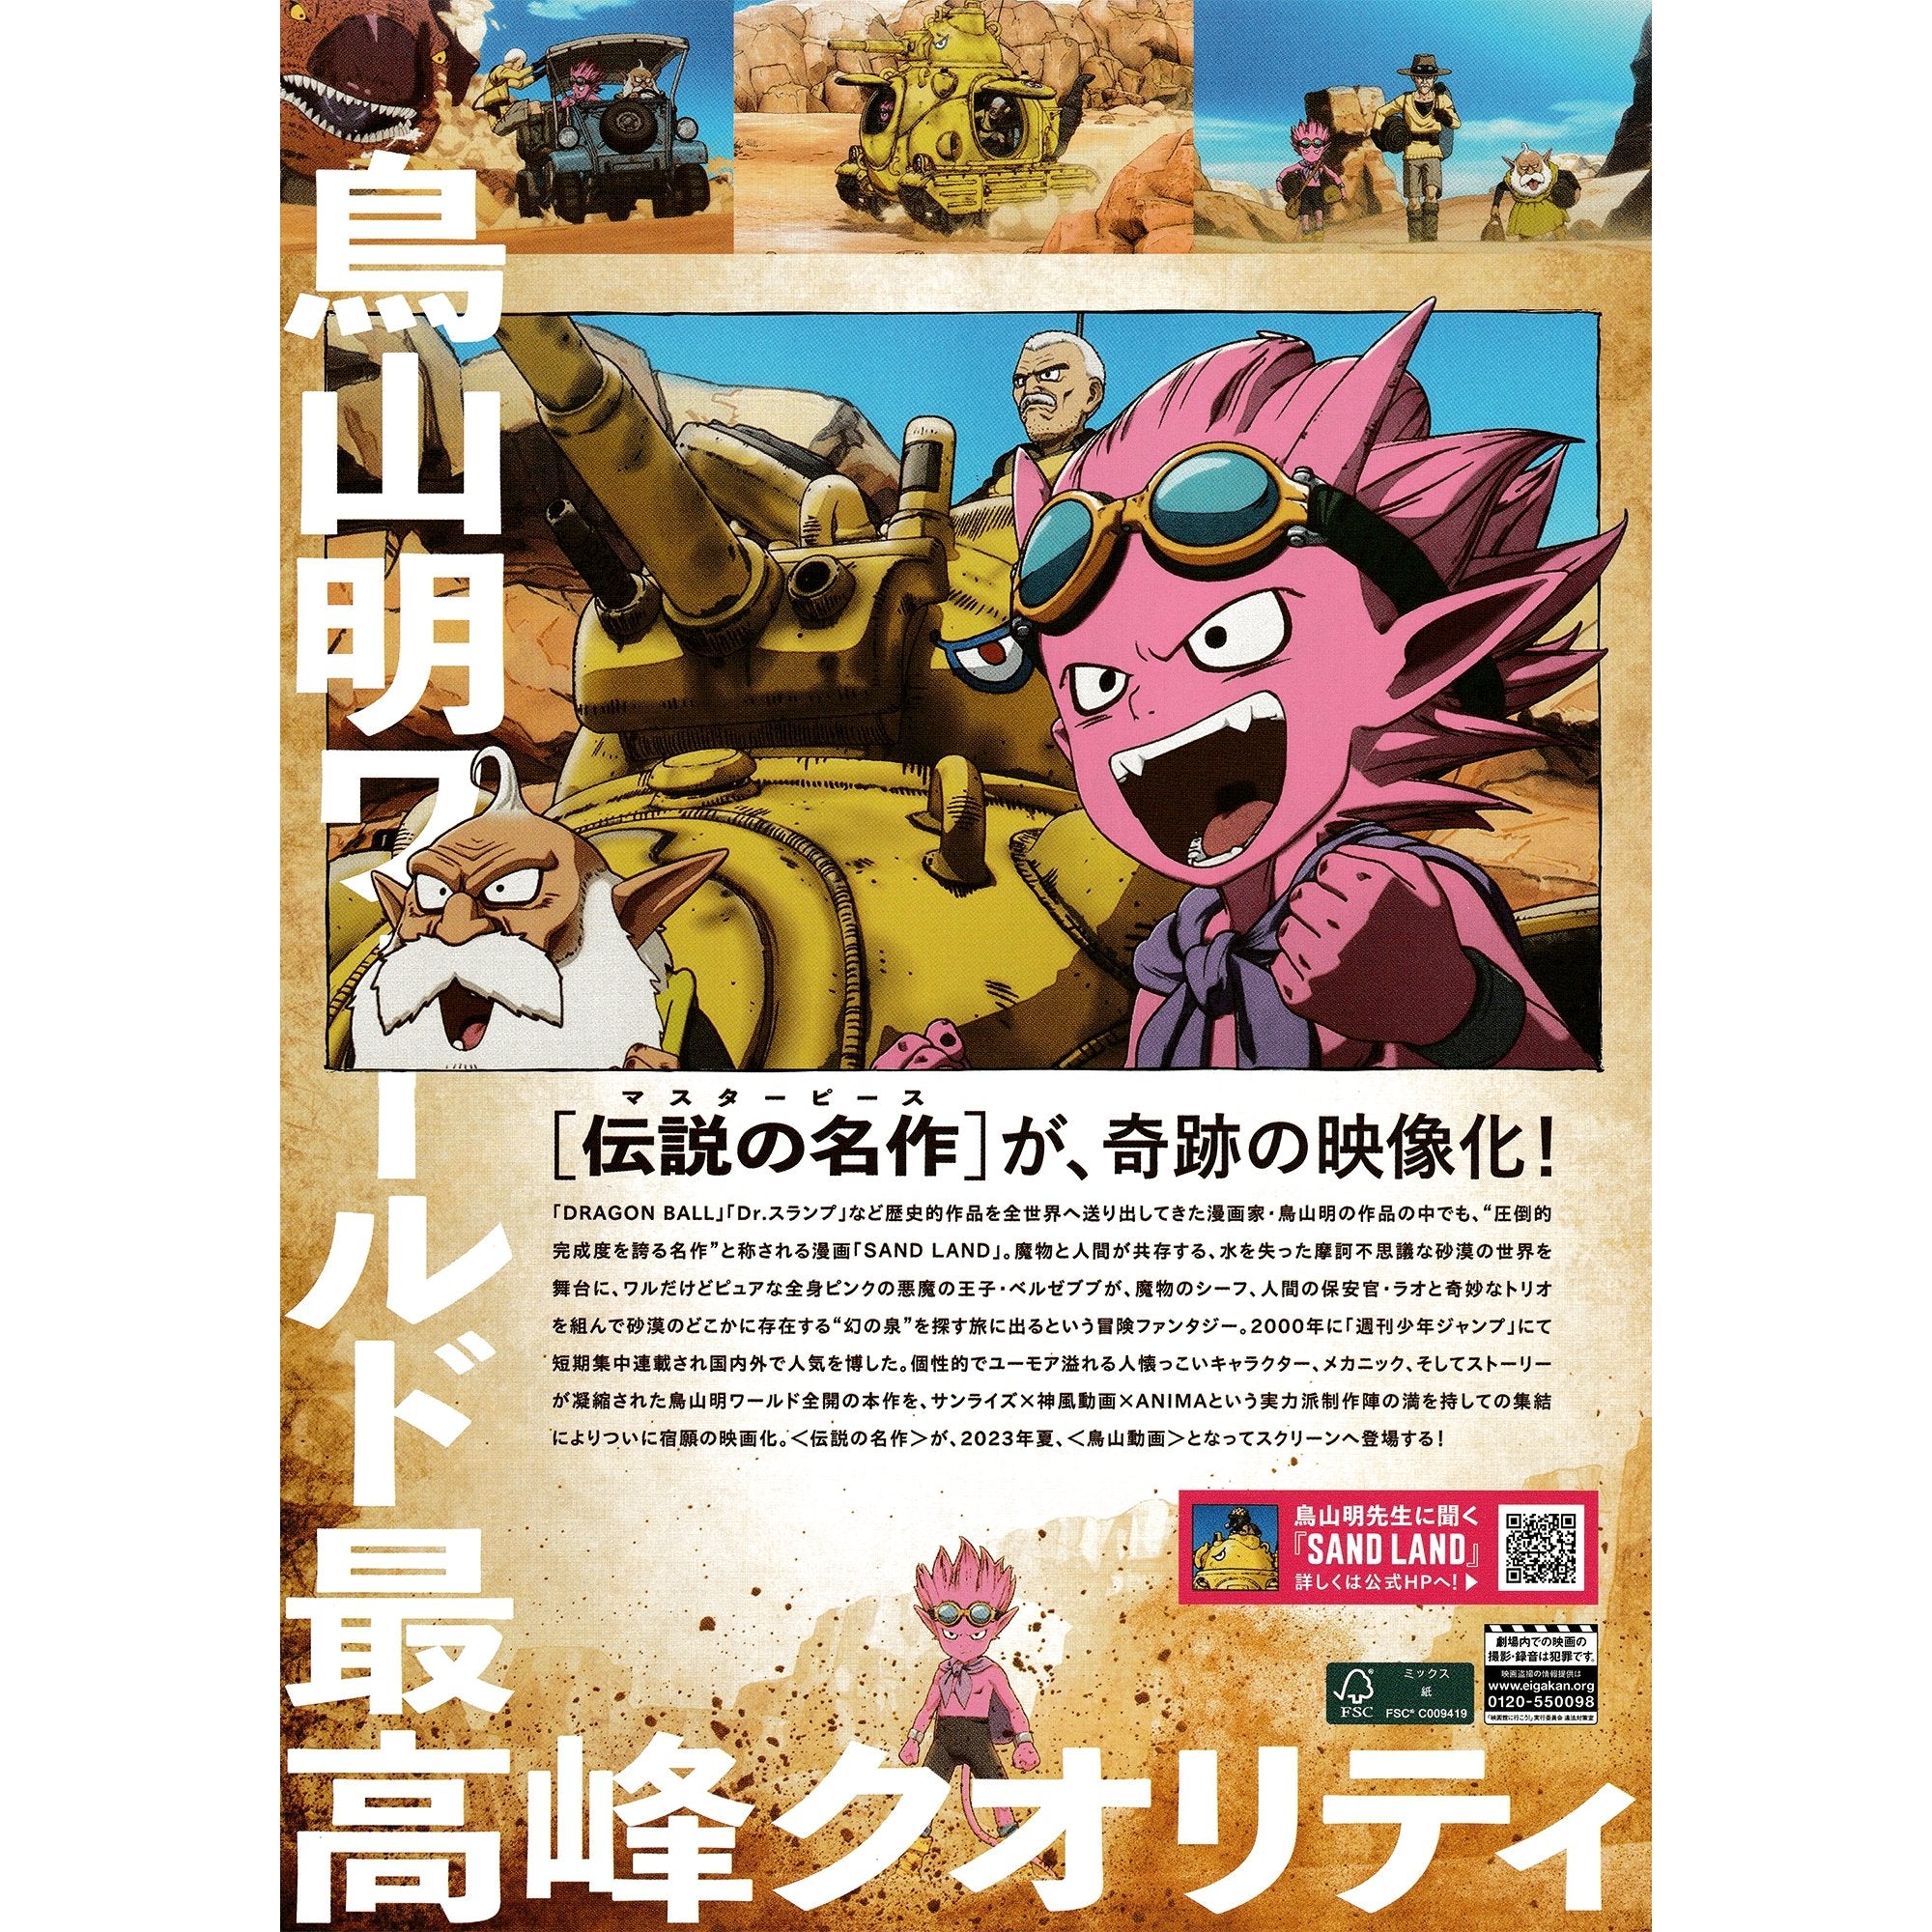 Set 2!! RPG REAL ESTATE illustration Anime Manga Chirashi/Flyer/Poster Lot